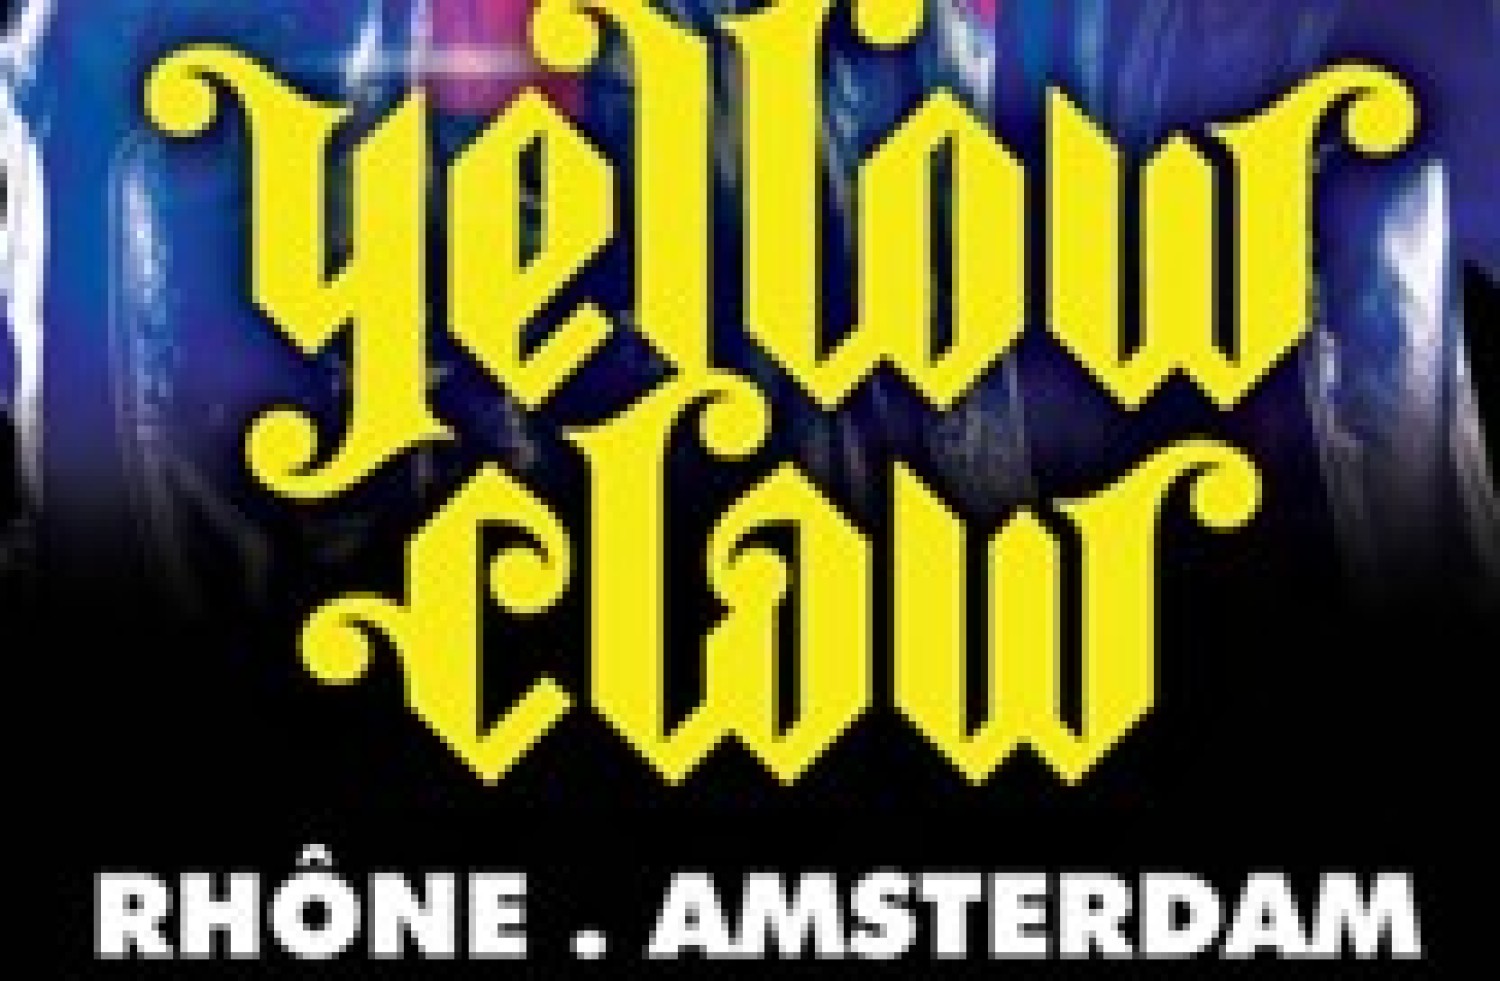 Party nieuws: R&B Meets House op vrijdag 31 mei met o.a. Yellow Claw